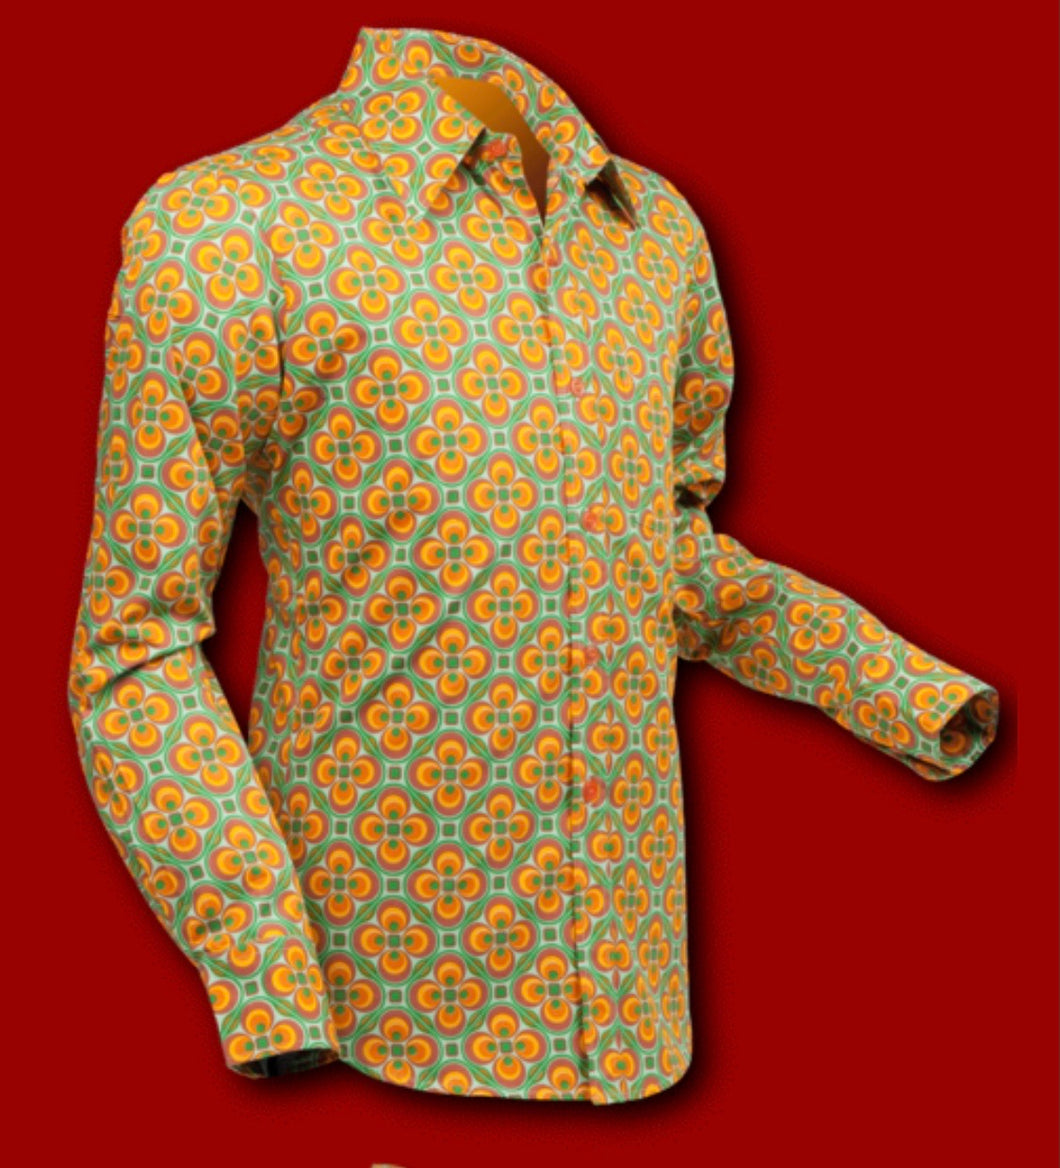 Dotsgrid design long sleeved Retro 70s style shirt in Green & Orange